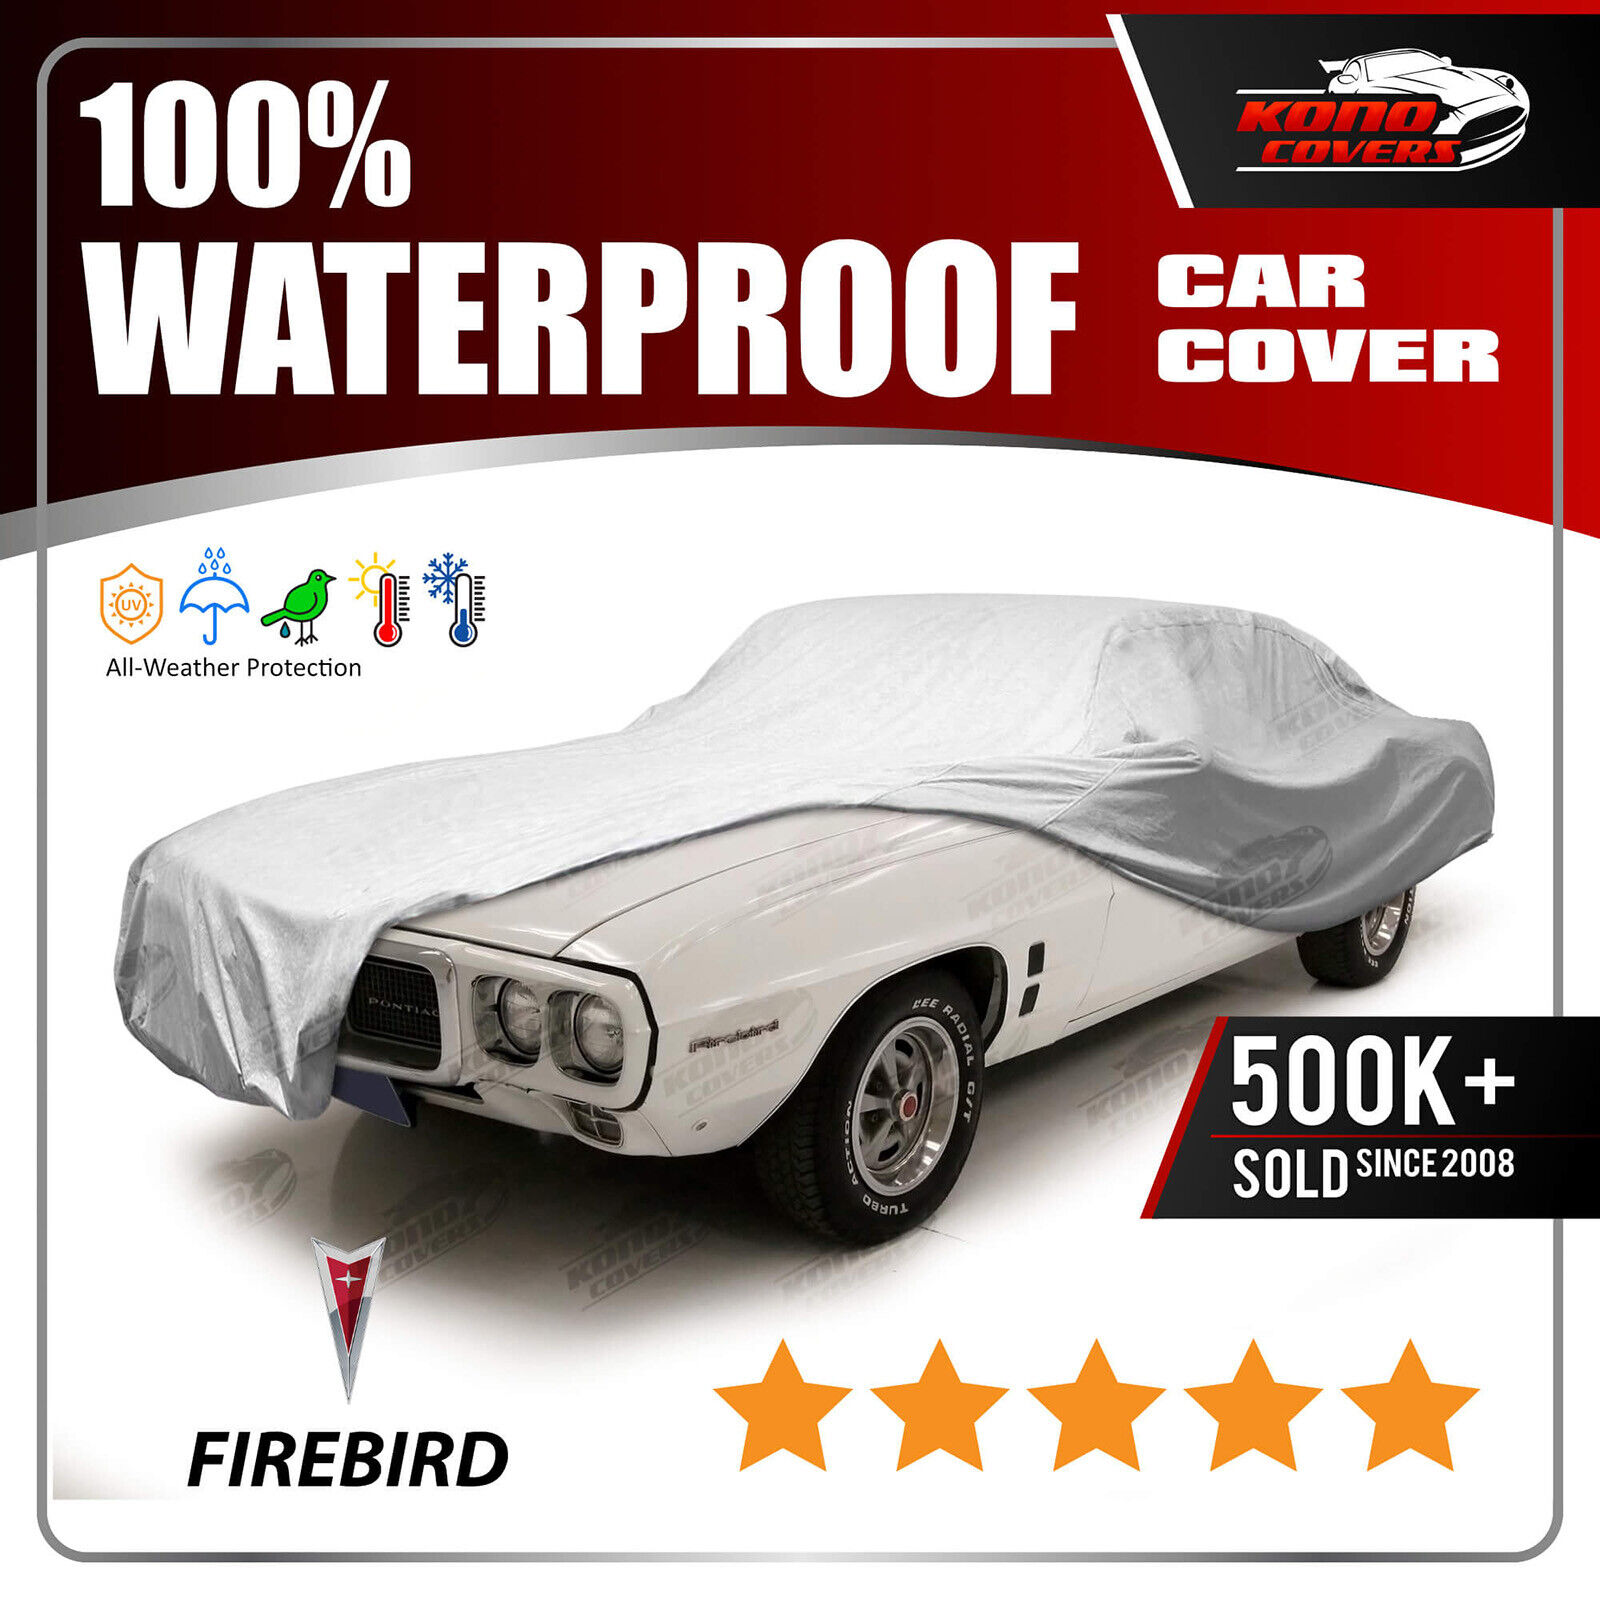 PONTIAC FIREBIRD 1969 CAR COVER - 100% Waterproof 100% Breathable